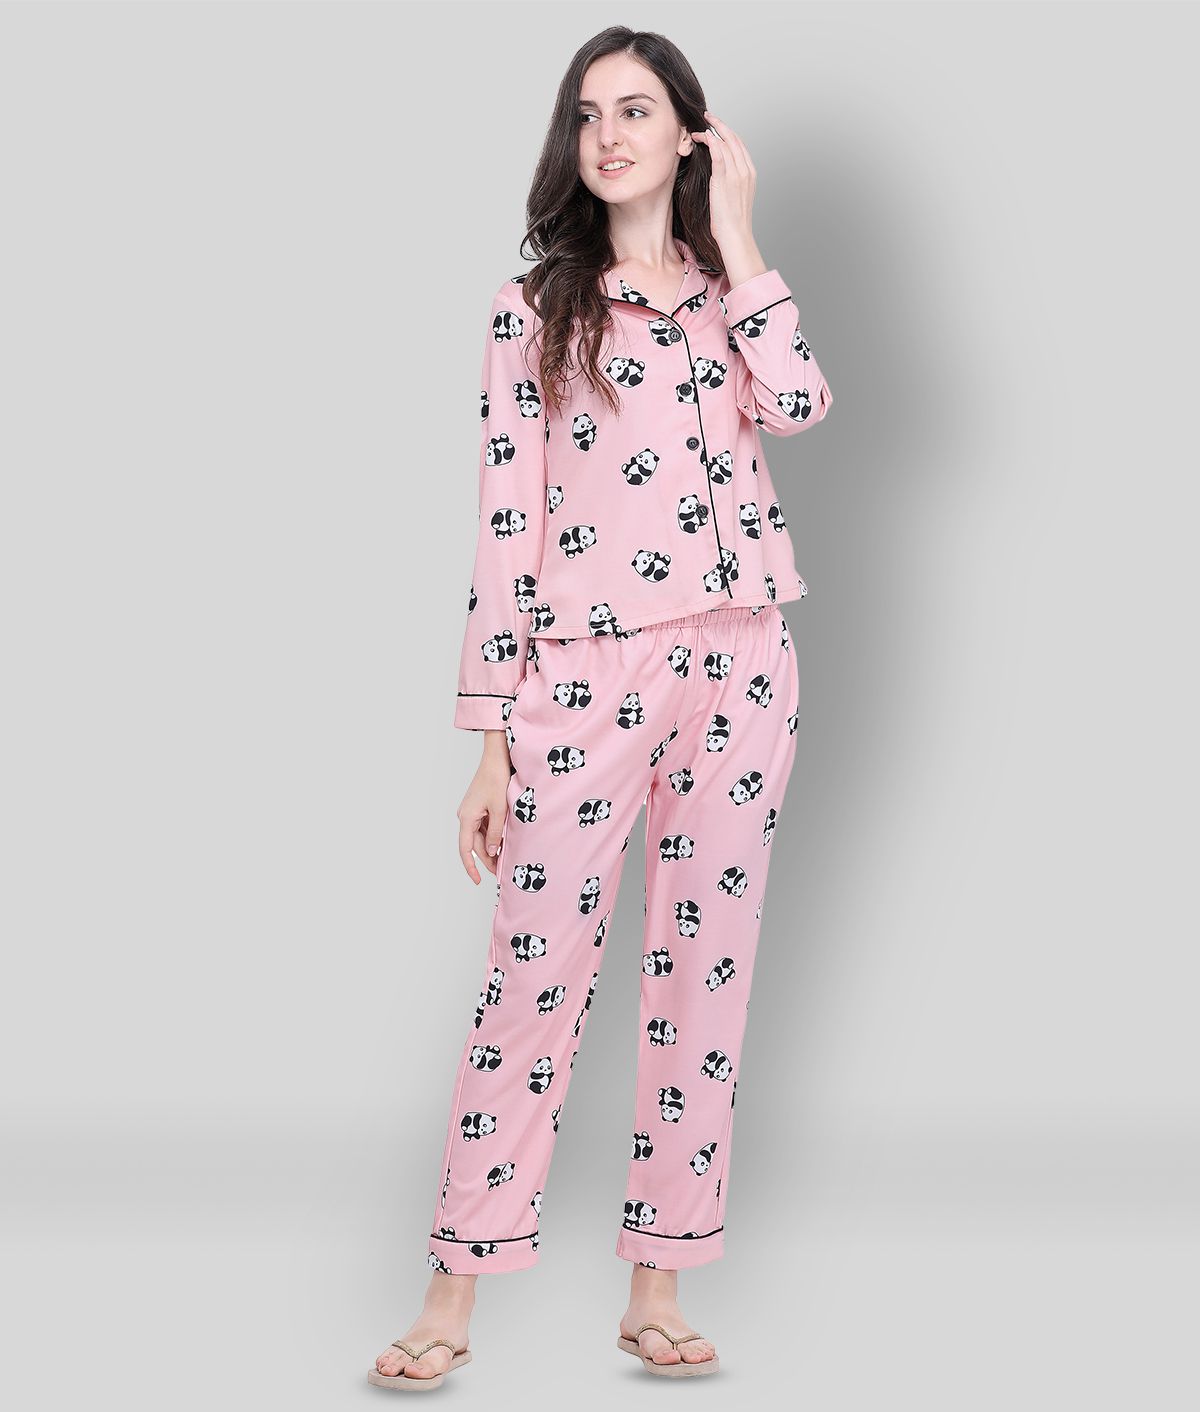     			Smarty Pants - Pink Satin Women's Nightwear Nightsuit Sets ( Pack of 1 )